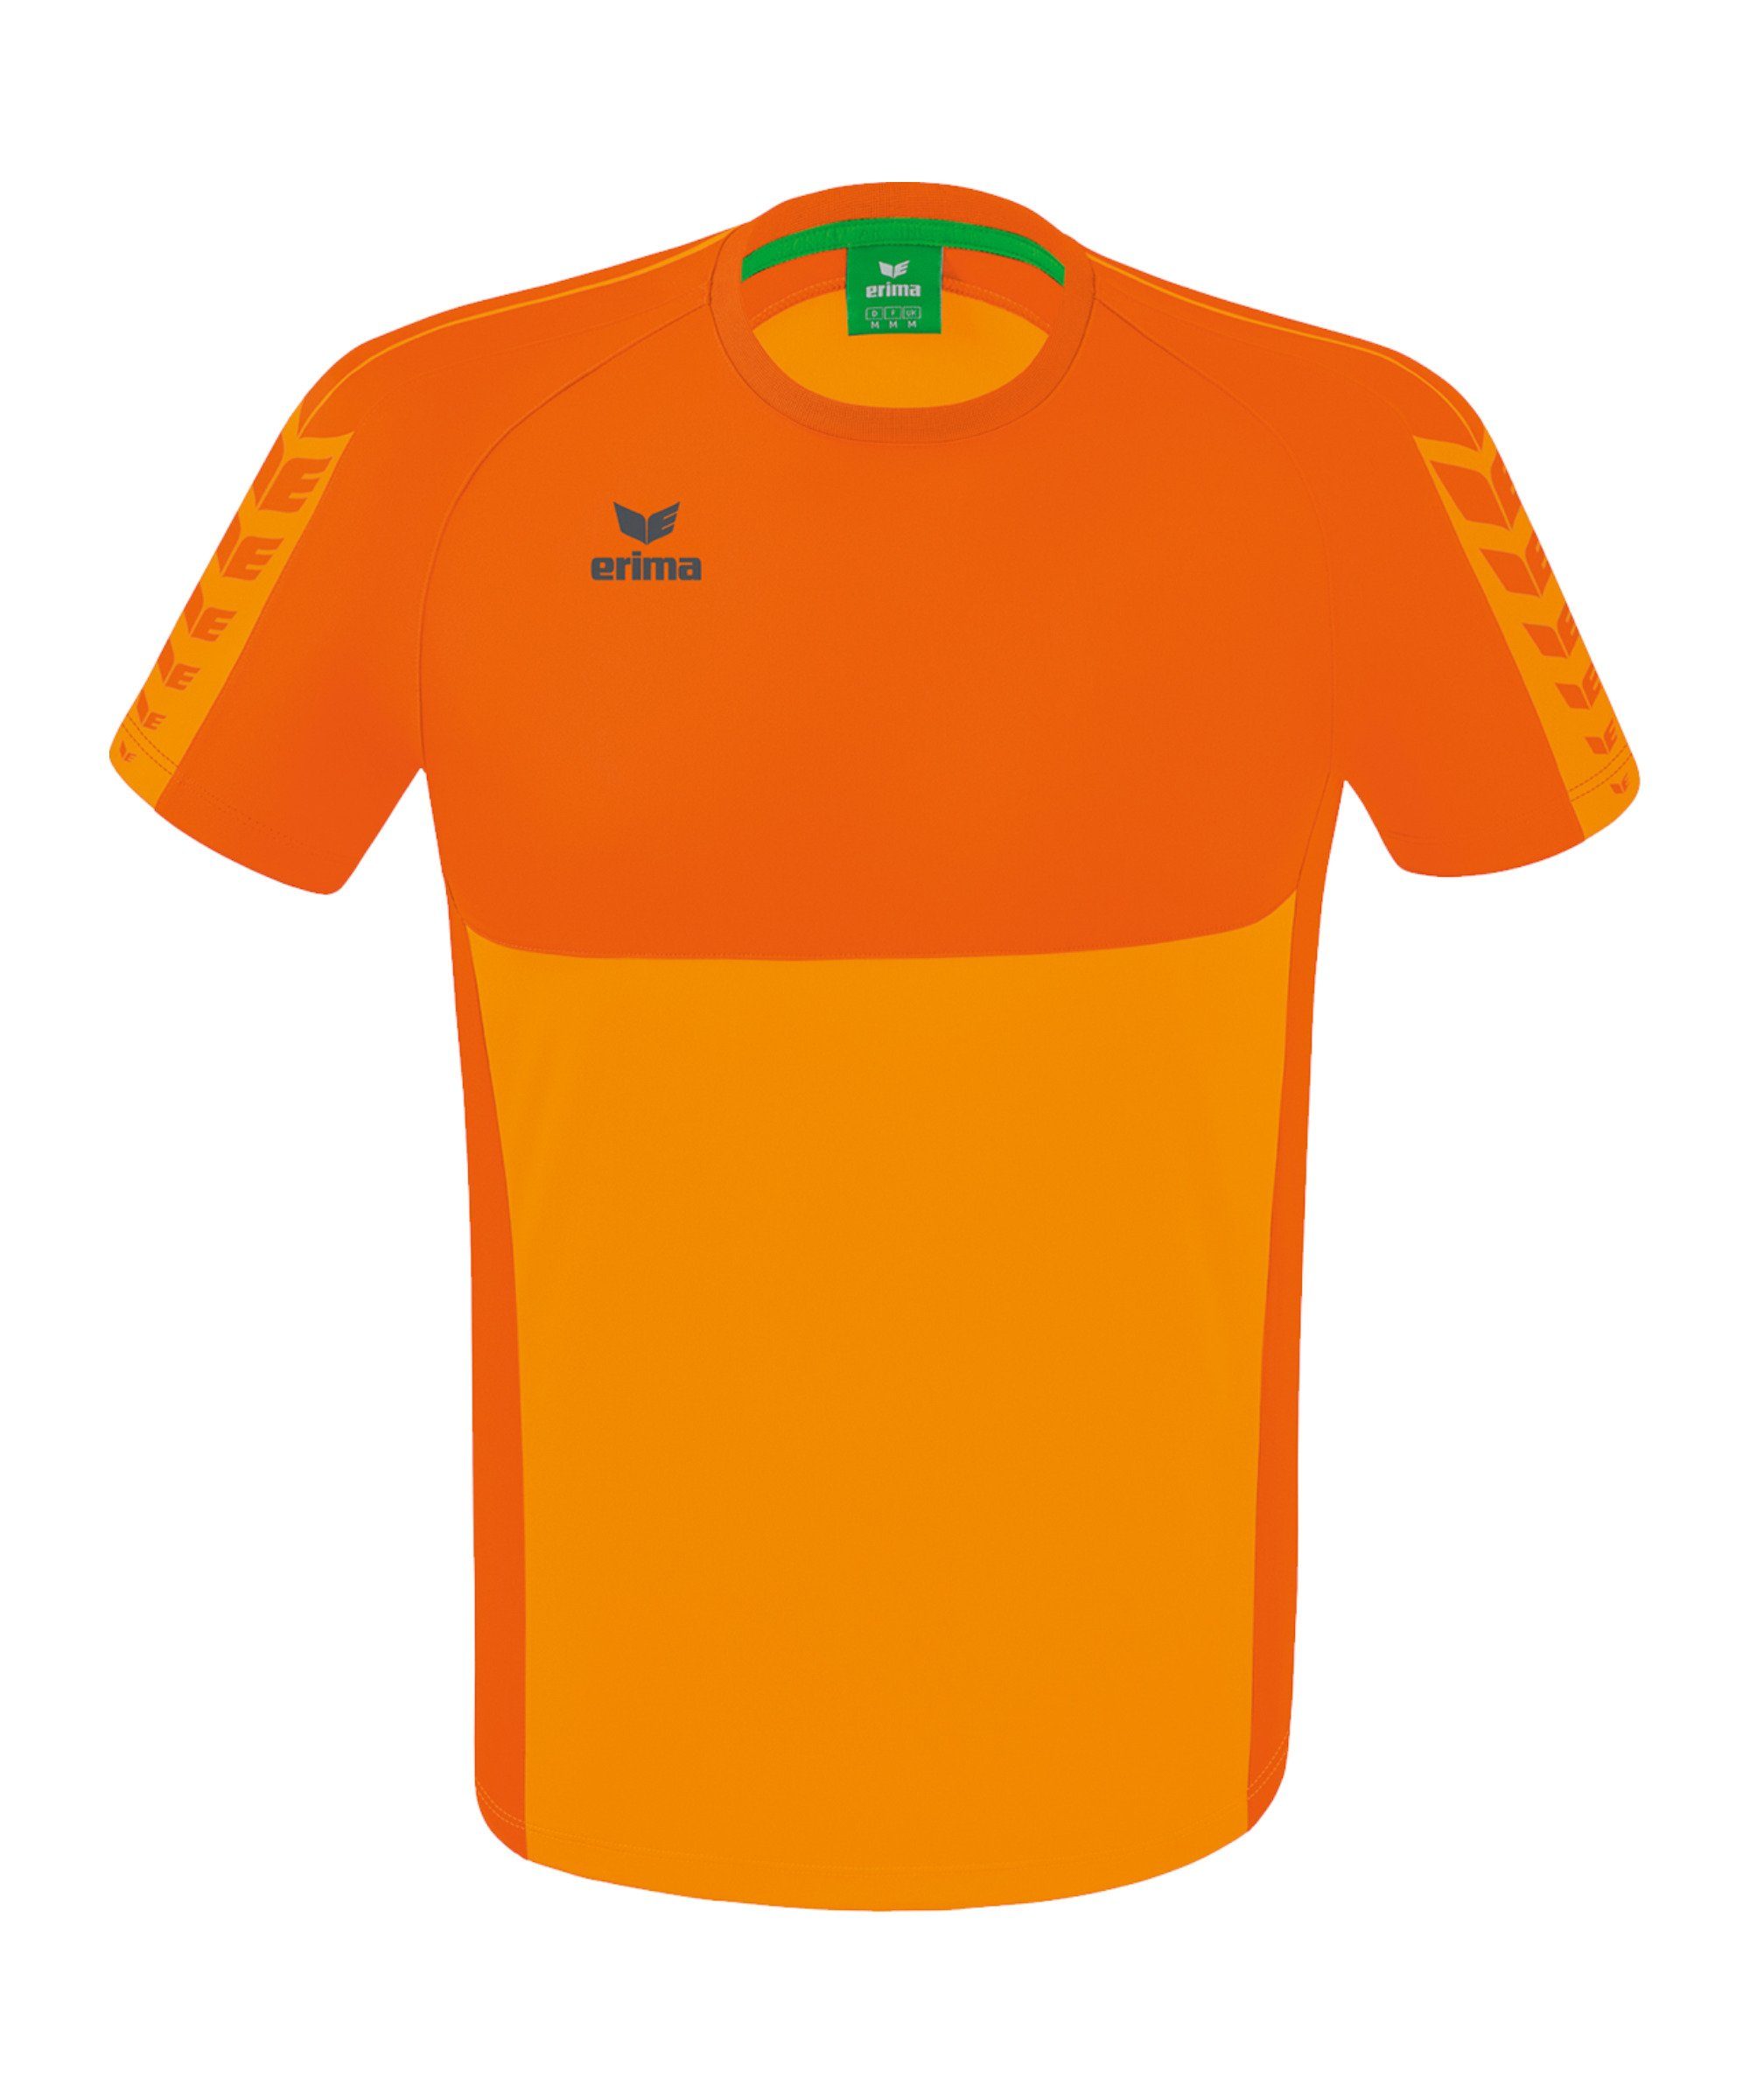 T-Shirt T-Shirt default Six Erima Wings orange